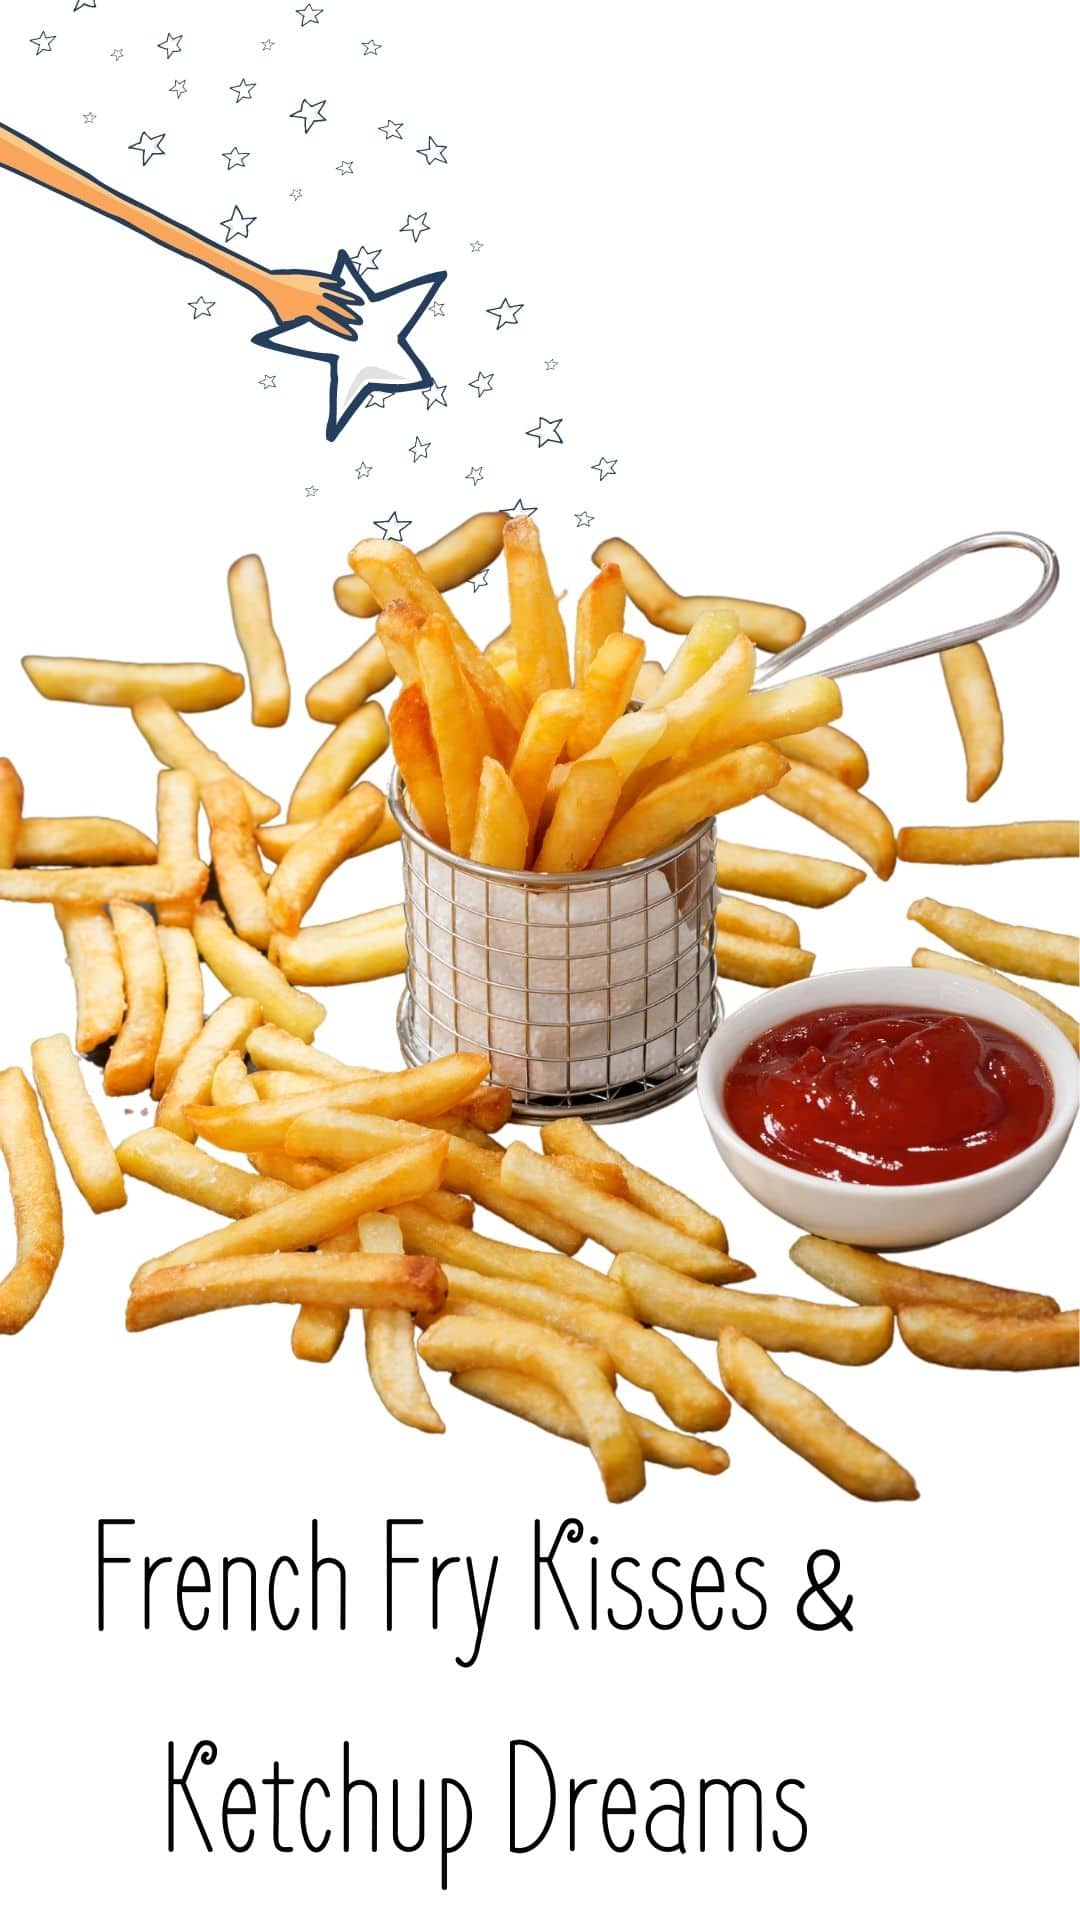 French Fry Kisses Ketchup Dreams Fries with ketchup